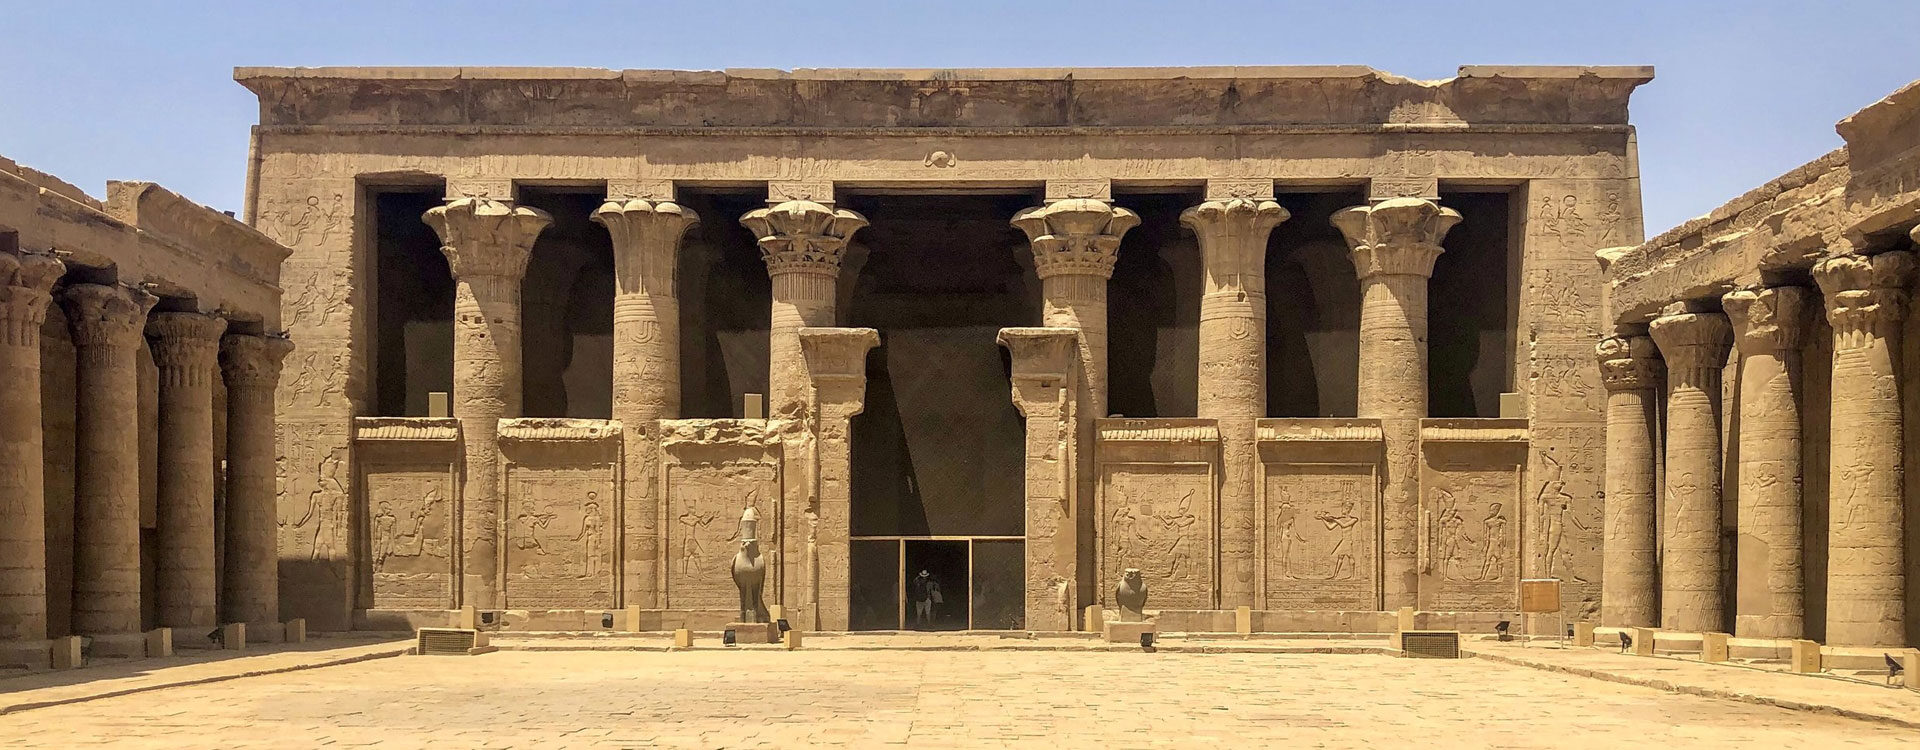 temple of horus plan